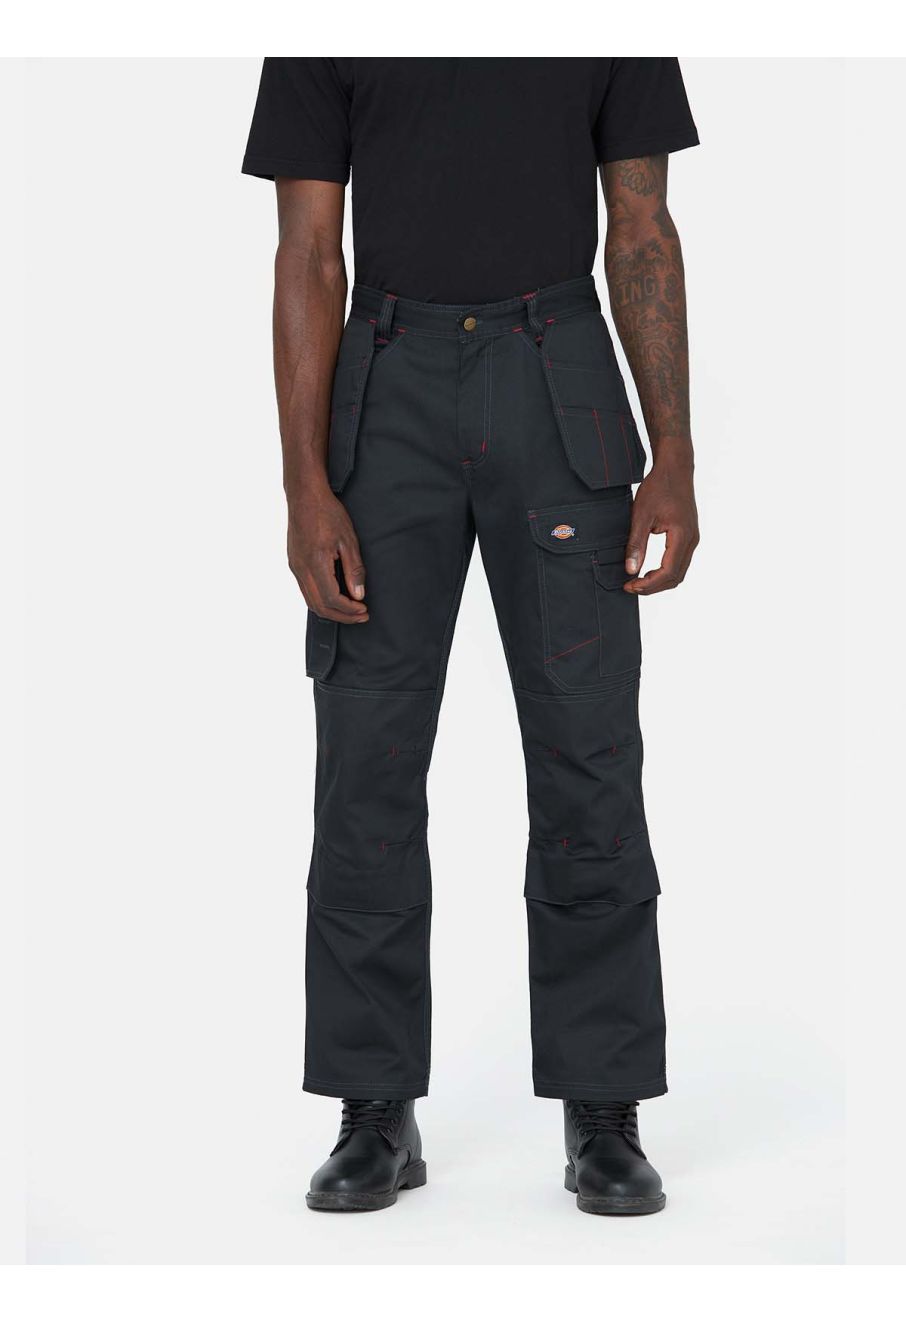 Blackrock Baratec Work Trousers Multi Pocket Trade Pro Pants Triple  Stitched | eBay